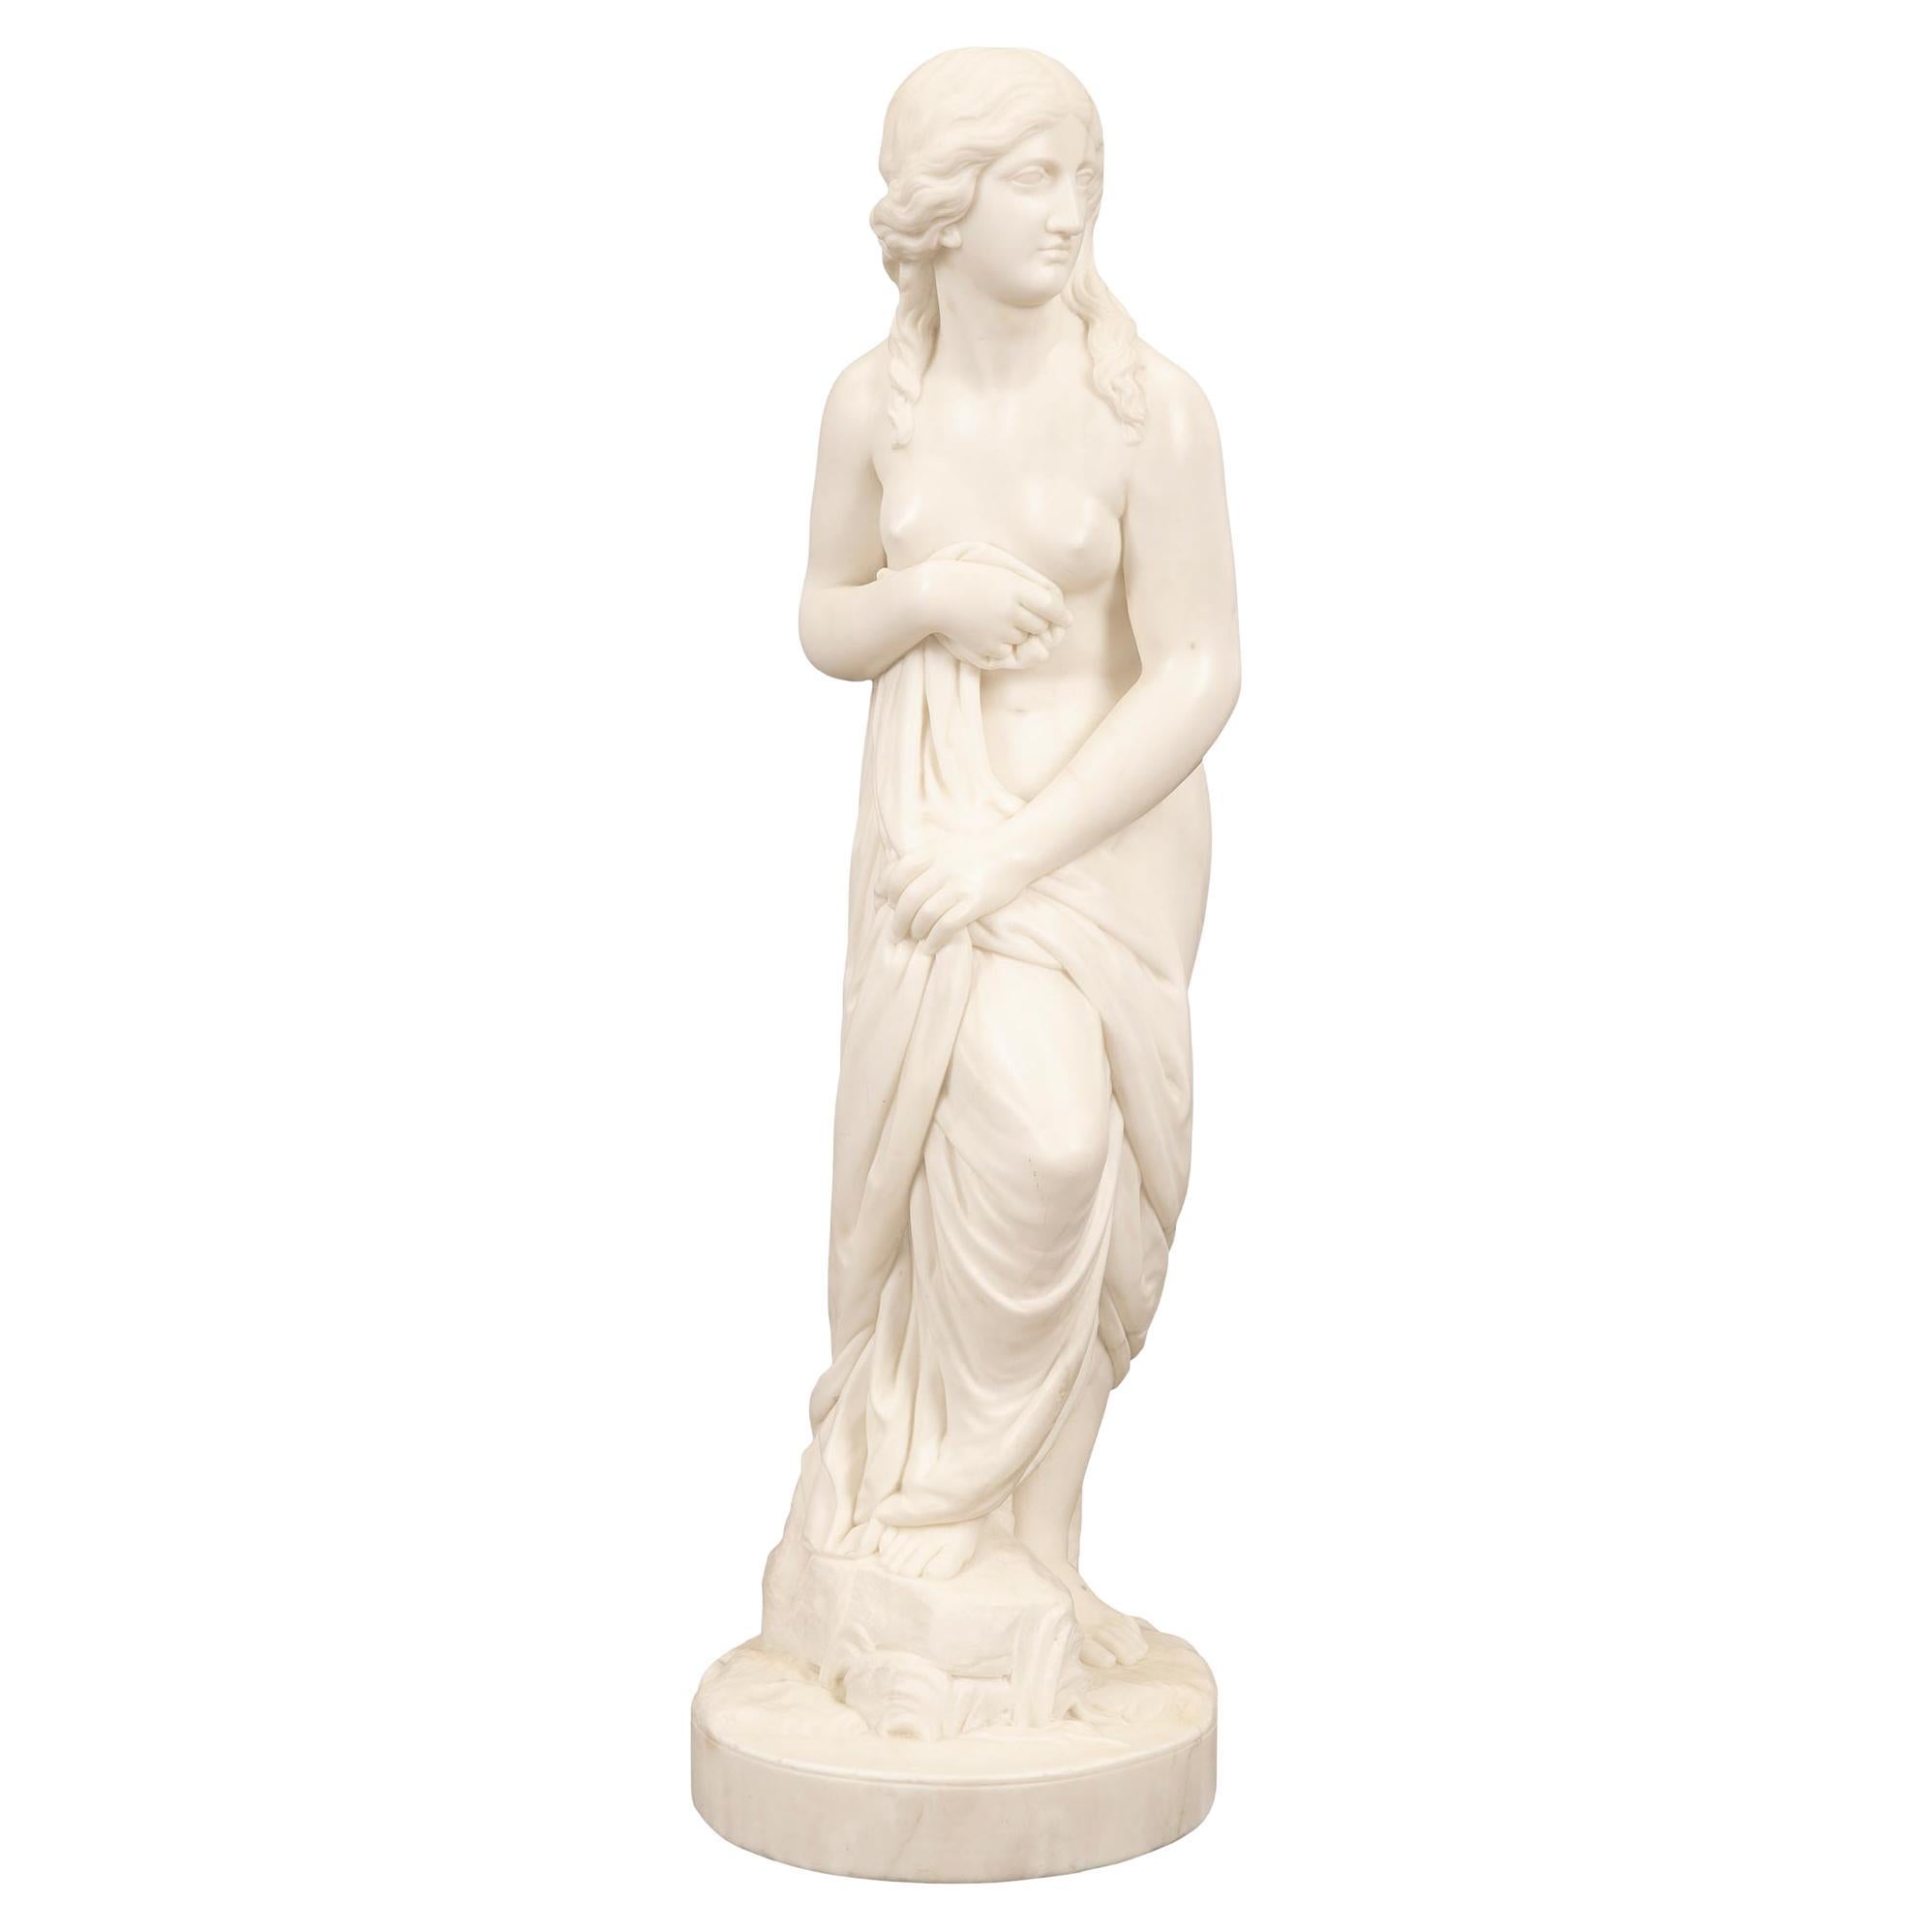 Italian 19th Century Neoclassical St. Marble Statue Of “La Baigneuse” For Sale